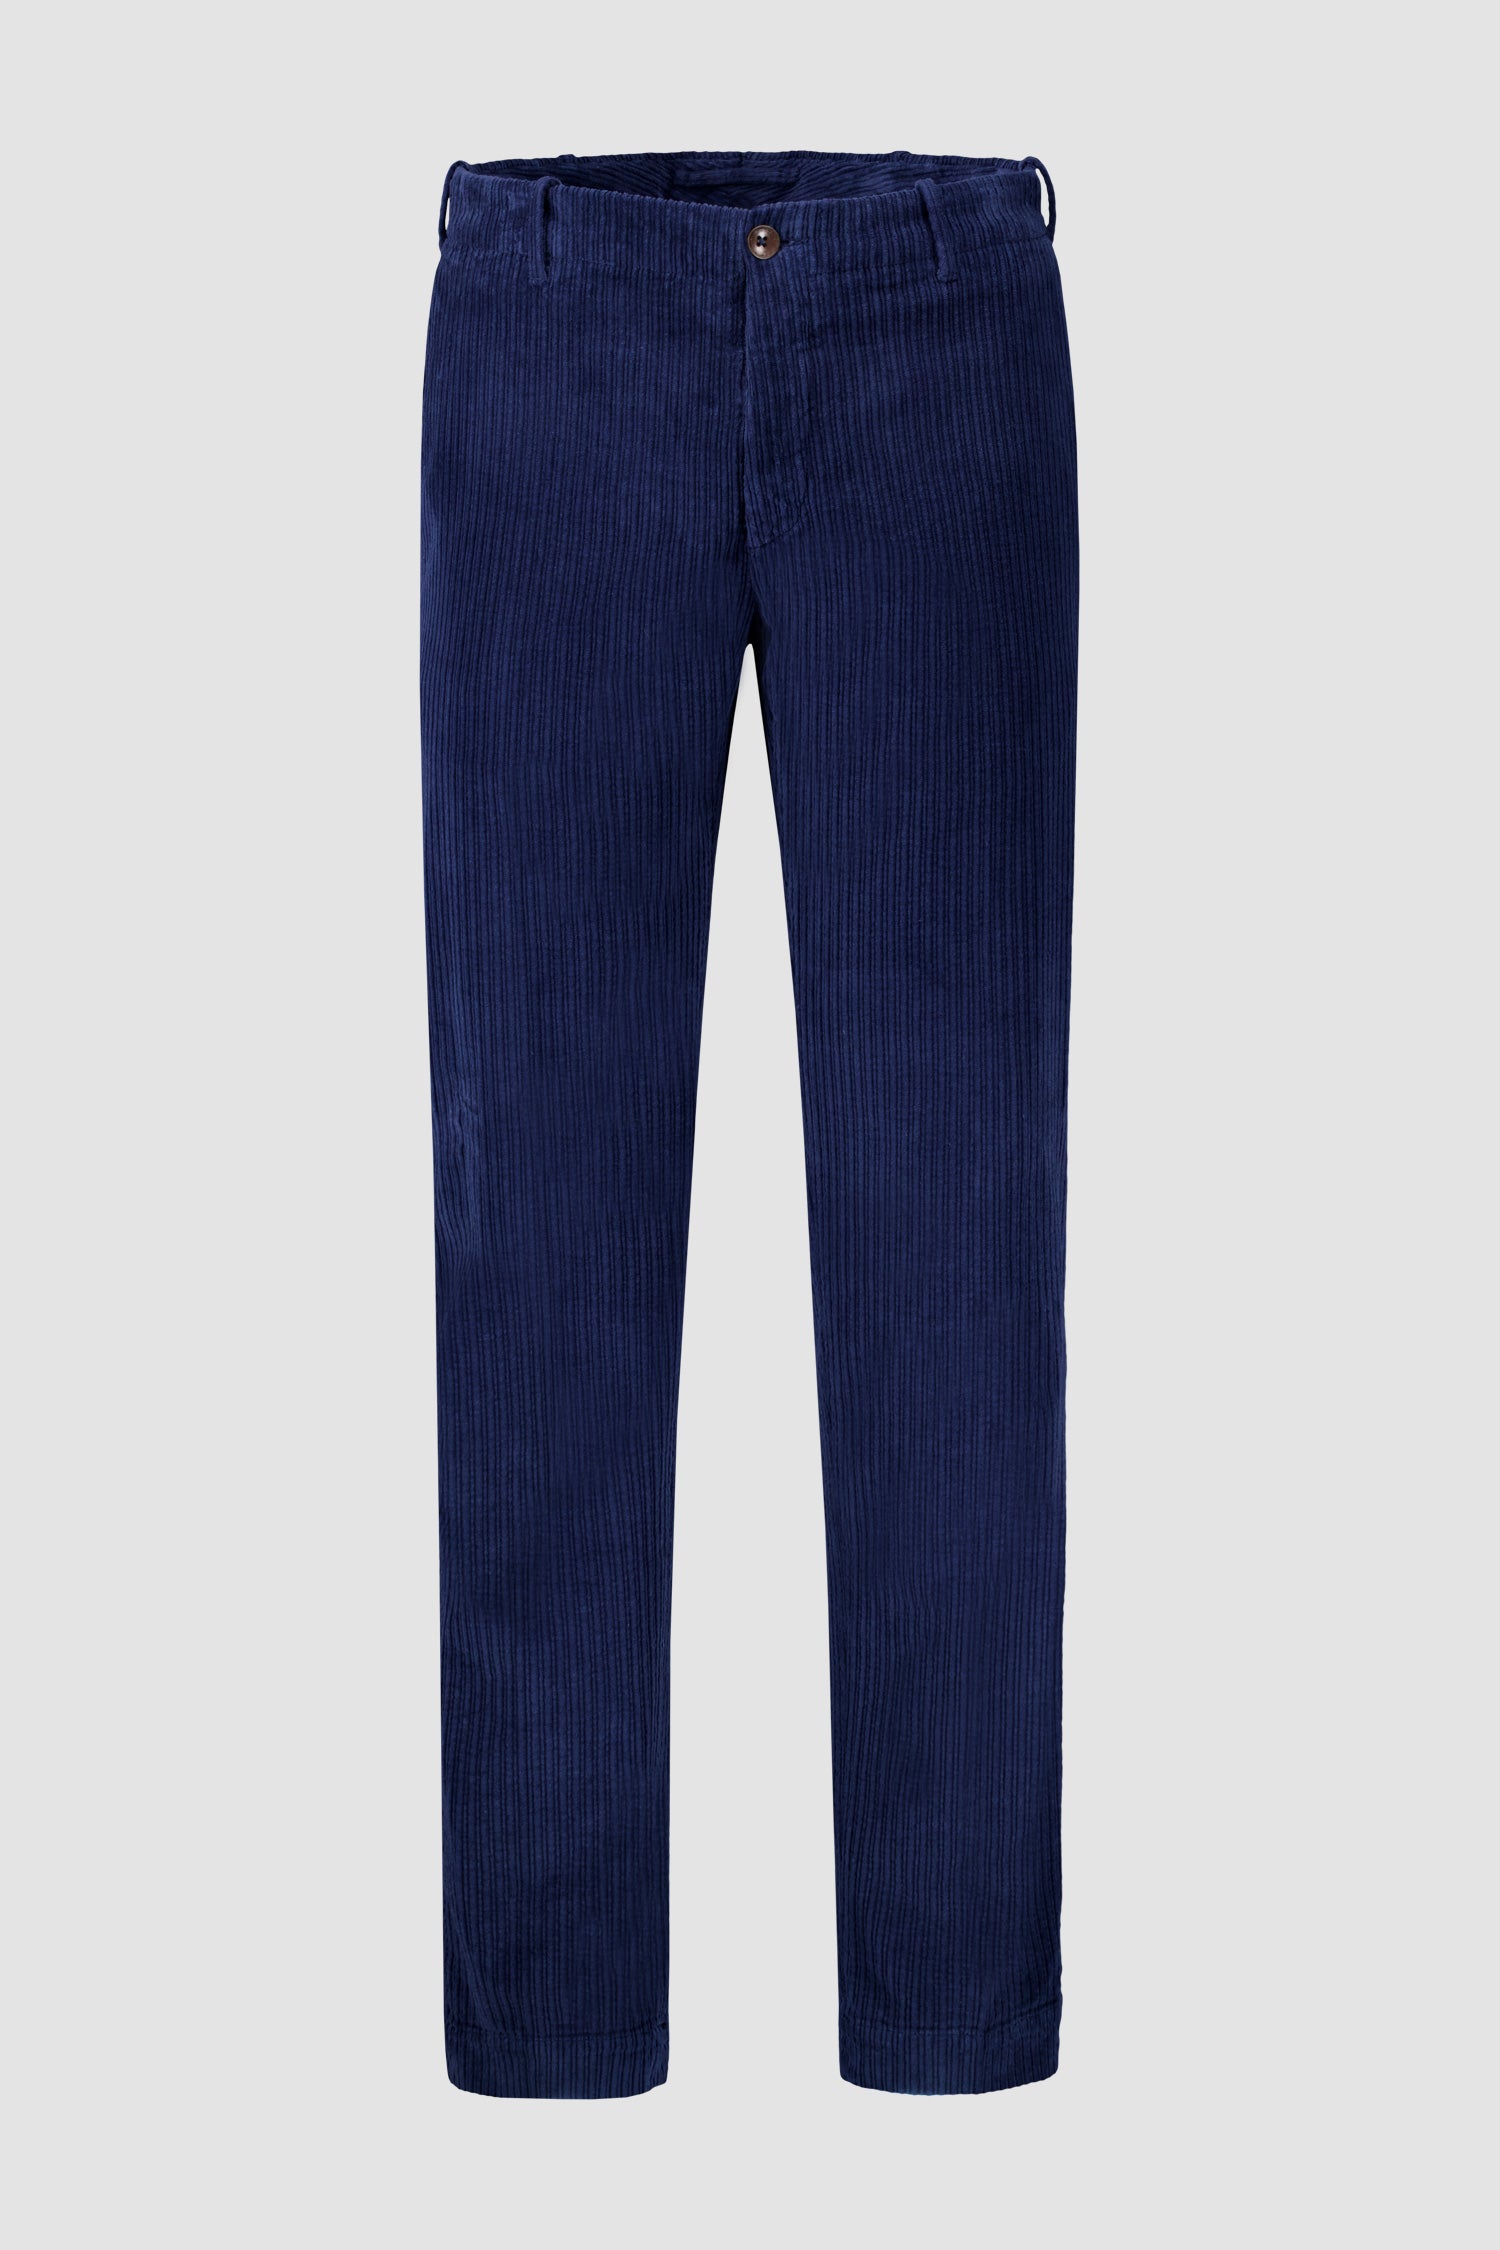 Incotex Blue Classic Trousers